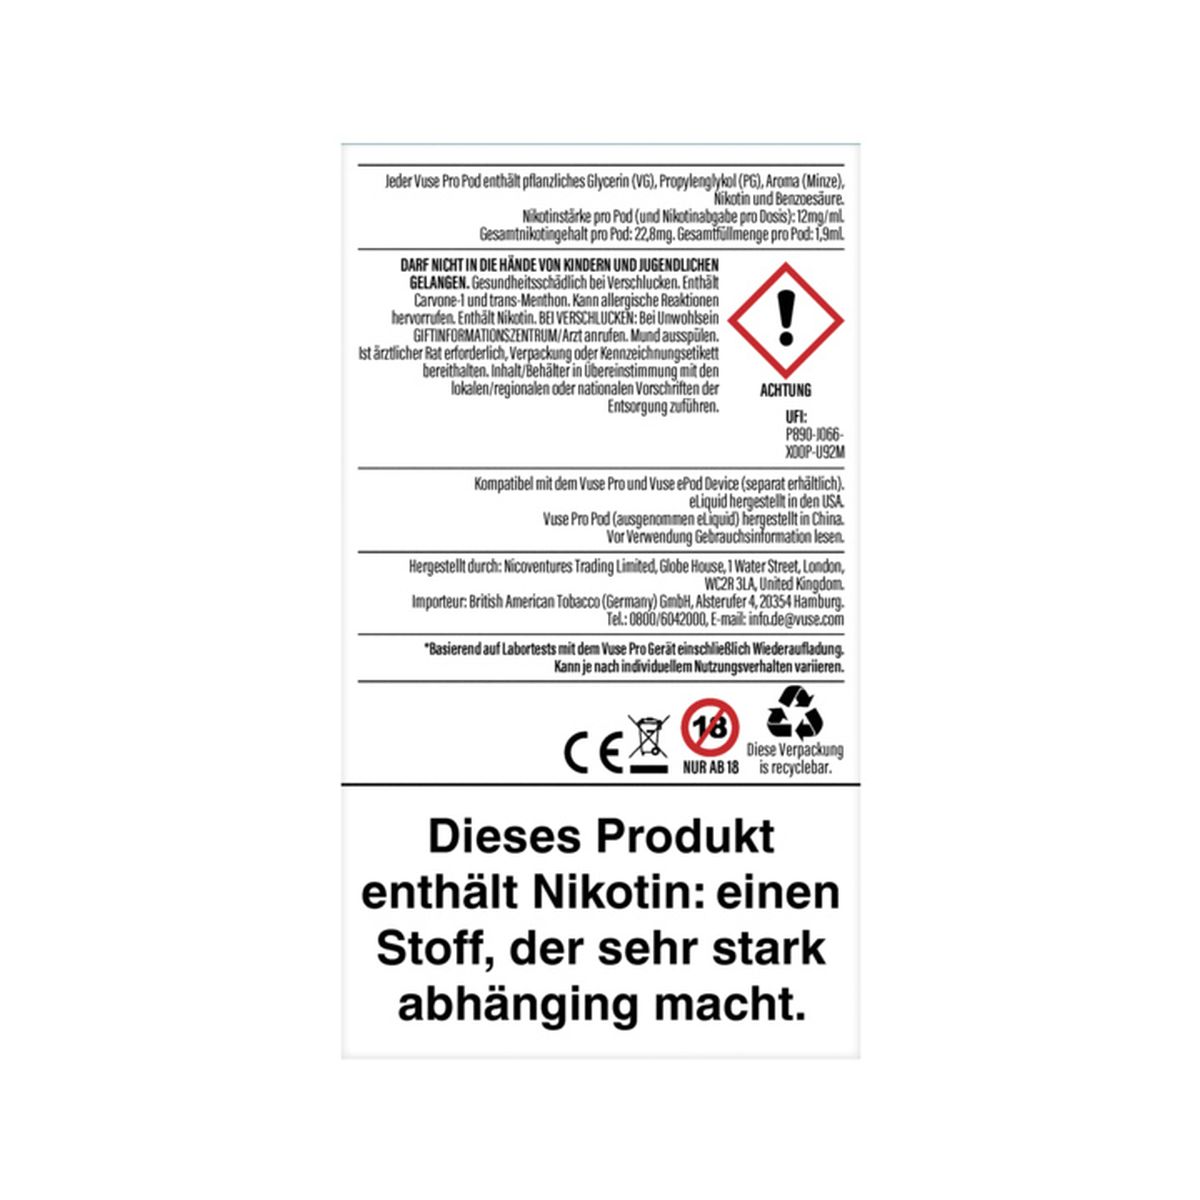 Vuse Vuse ePod (Pro Caps) Crisp Mint Nic Salts 12mg Nikotin 1,9ml bei www.Tabakring.de kaufen